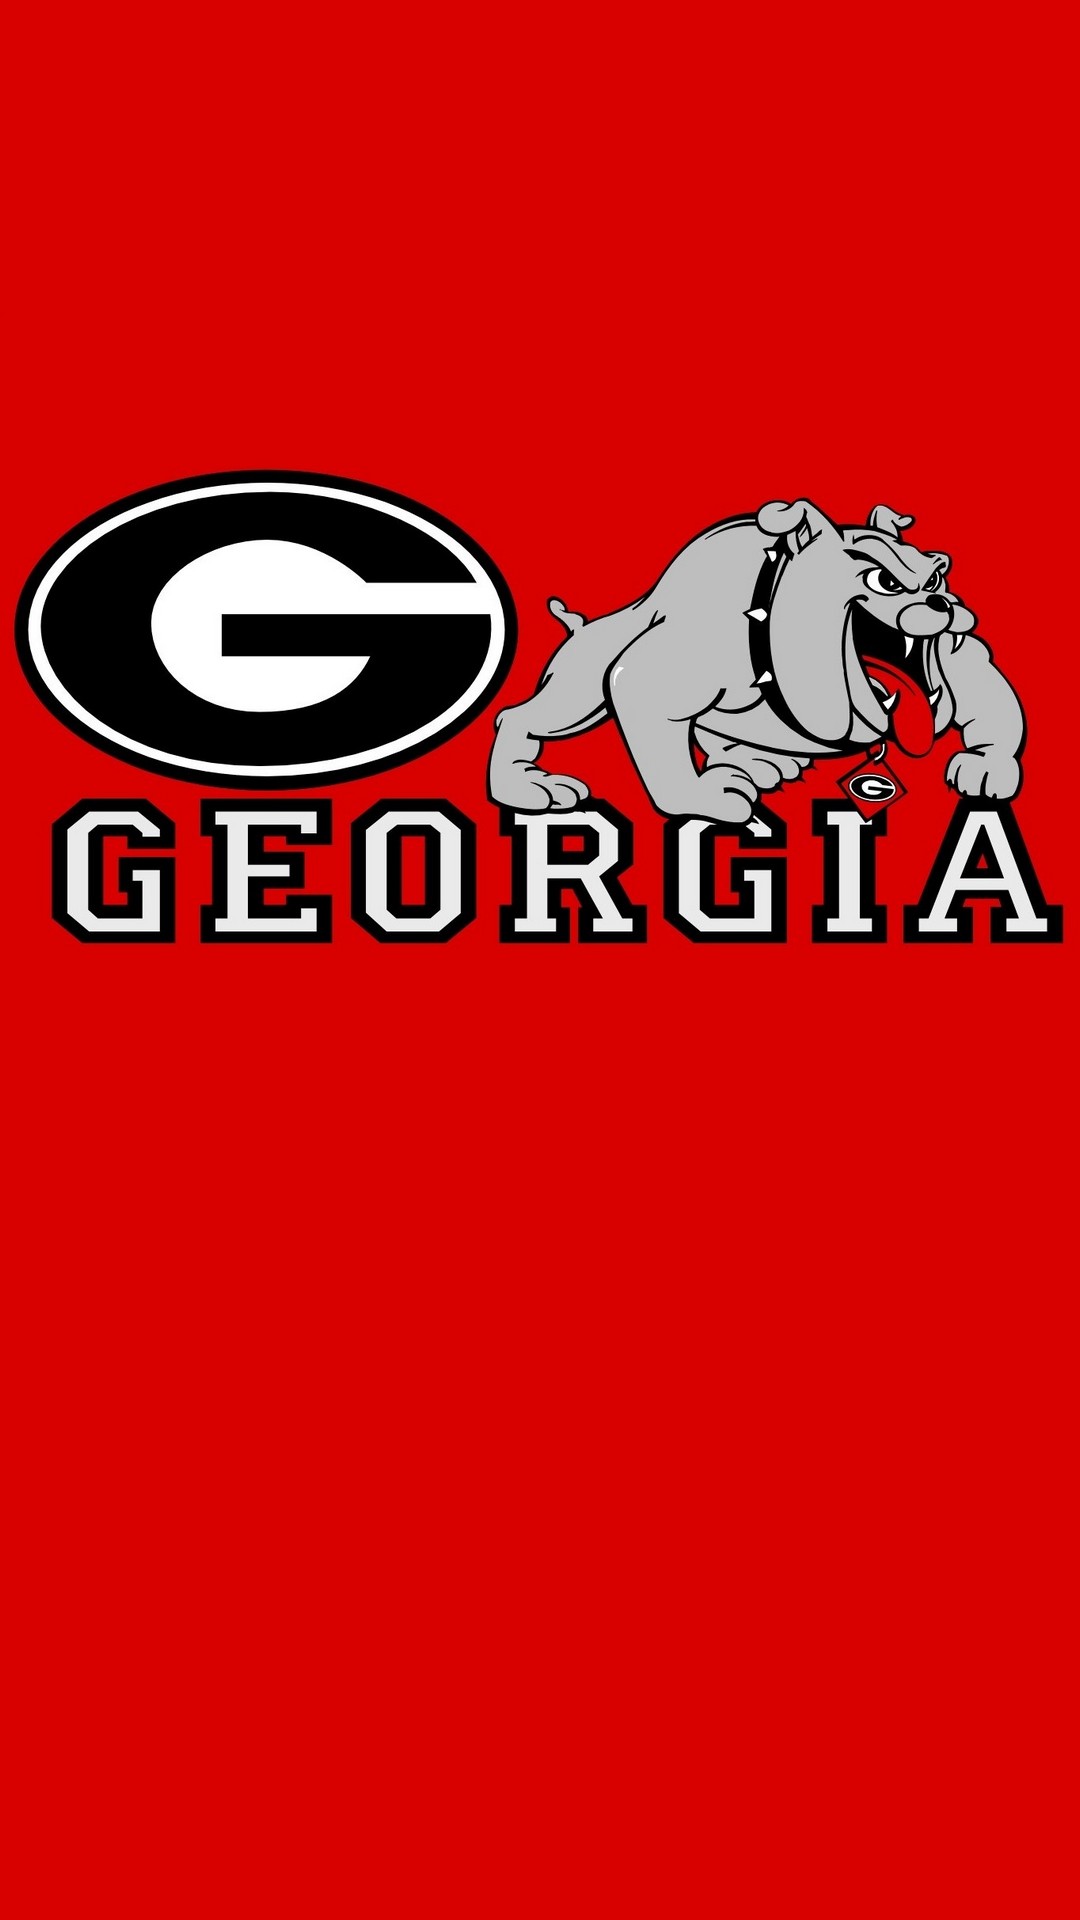 HD Georgia Bulldogs iPhone Wallpaper resolution 1080x1920